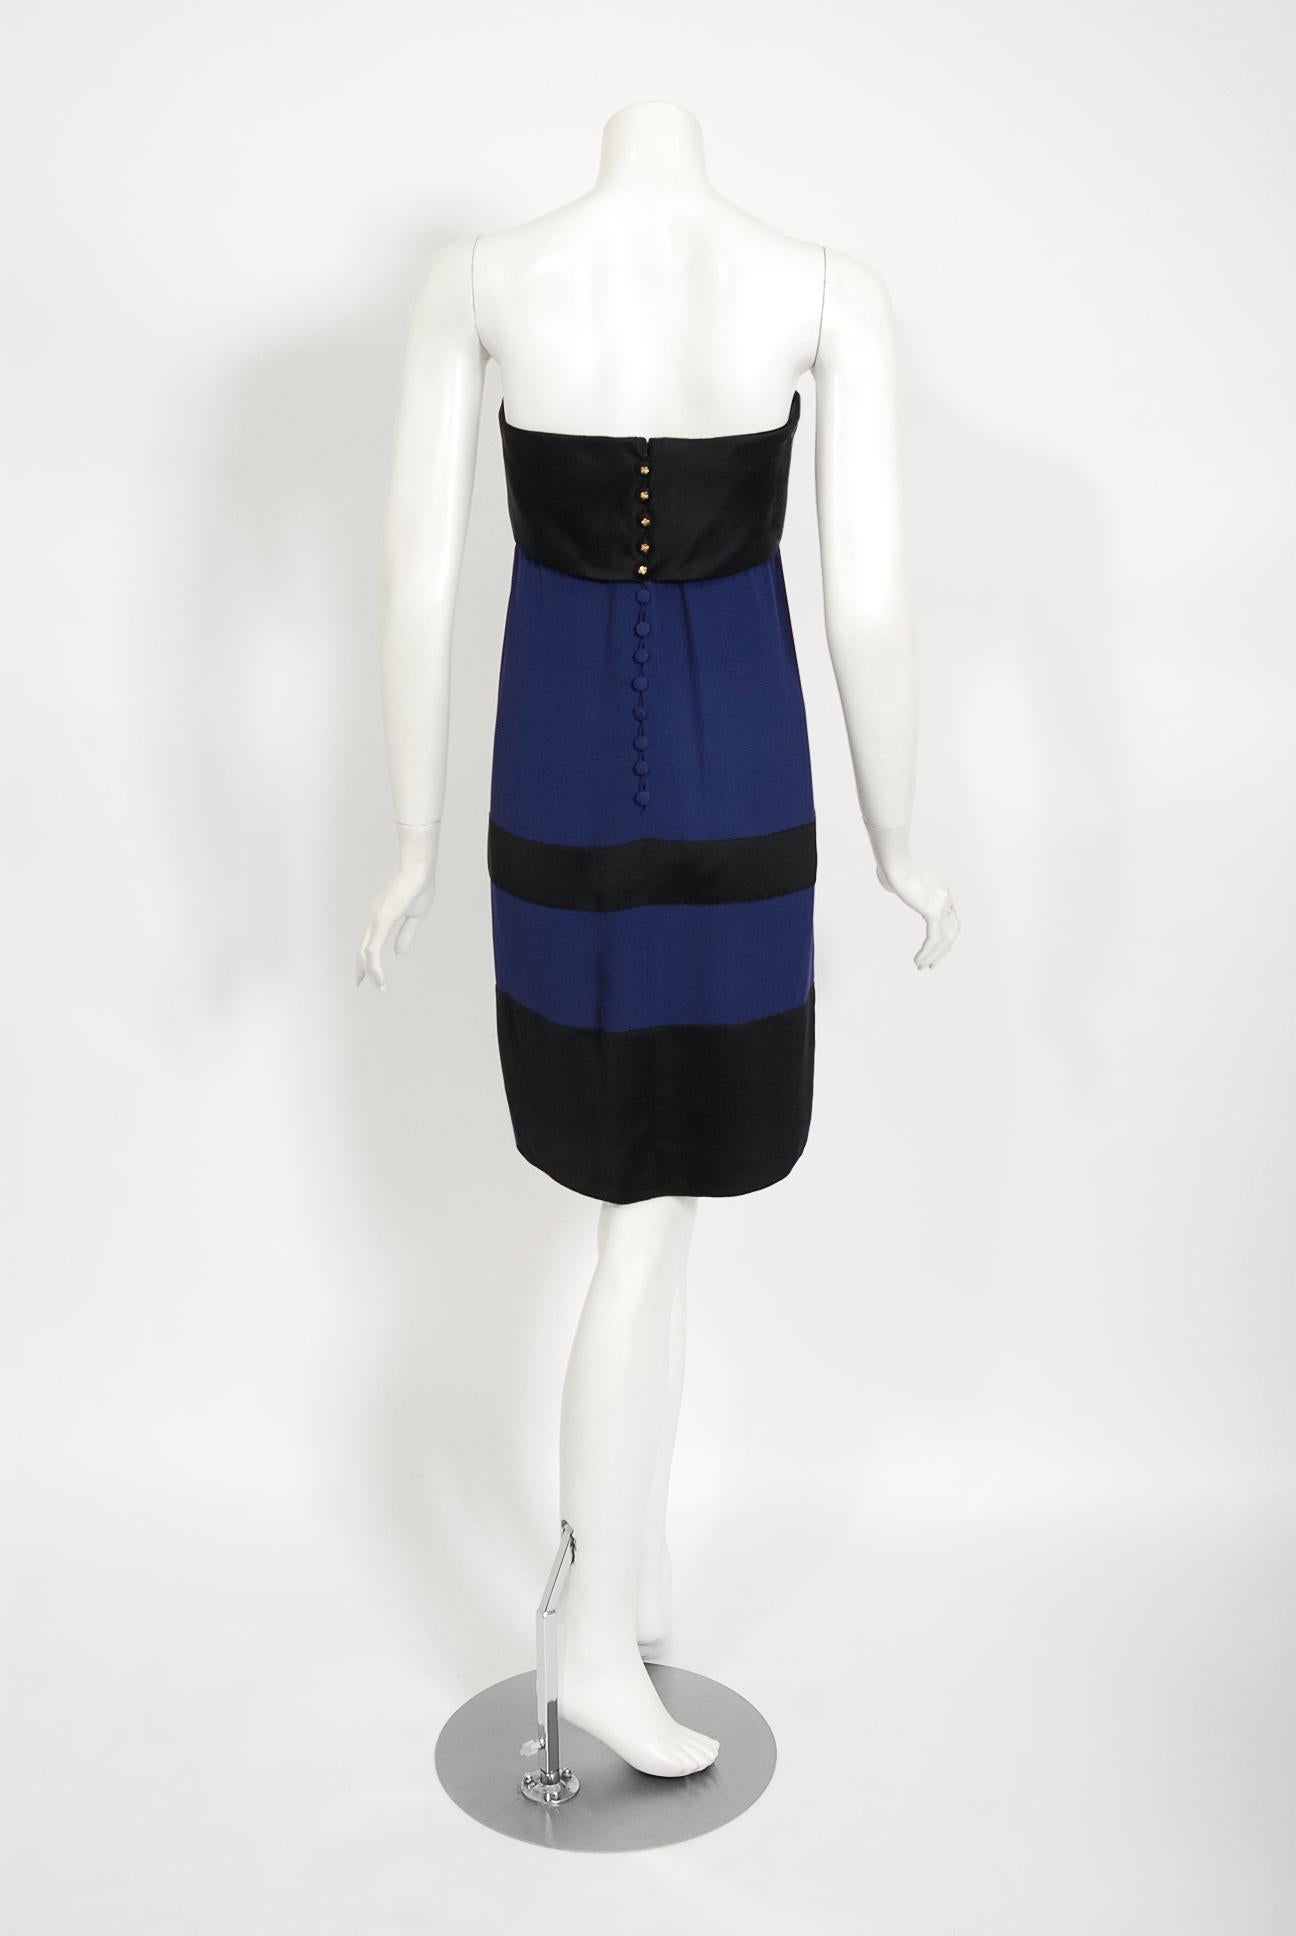 1990 Chanel by Karl Lagerfeld Documented Runway Silk Strapless Dress w/ Shawl For Sale 2